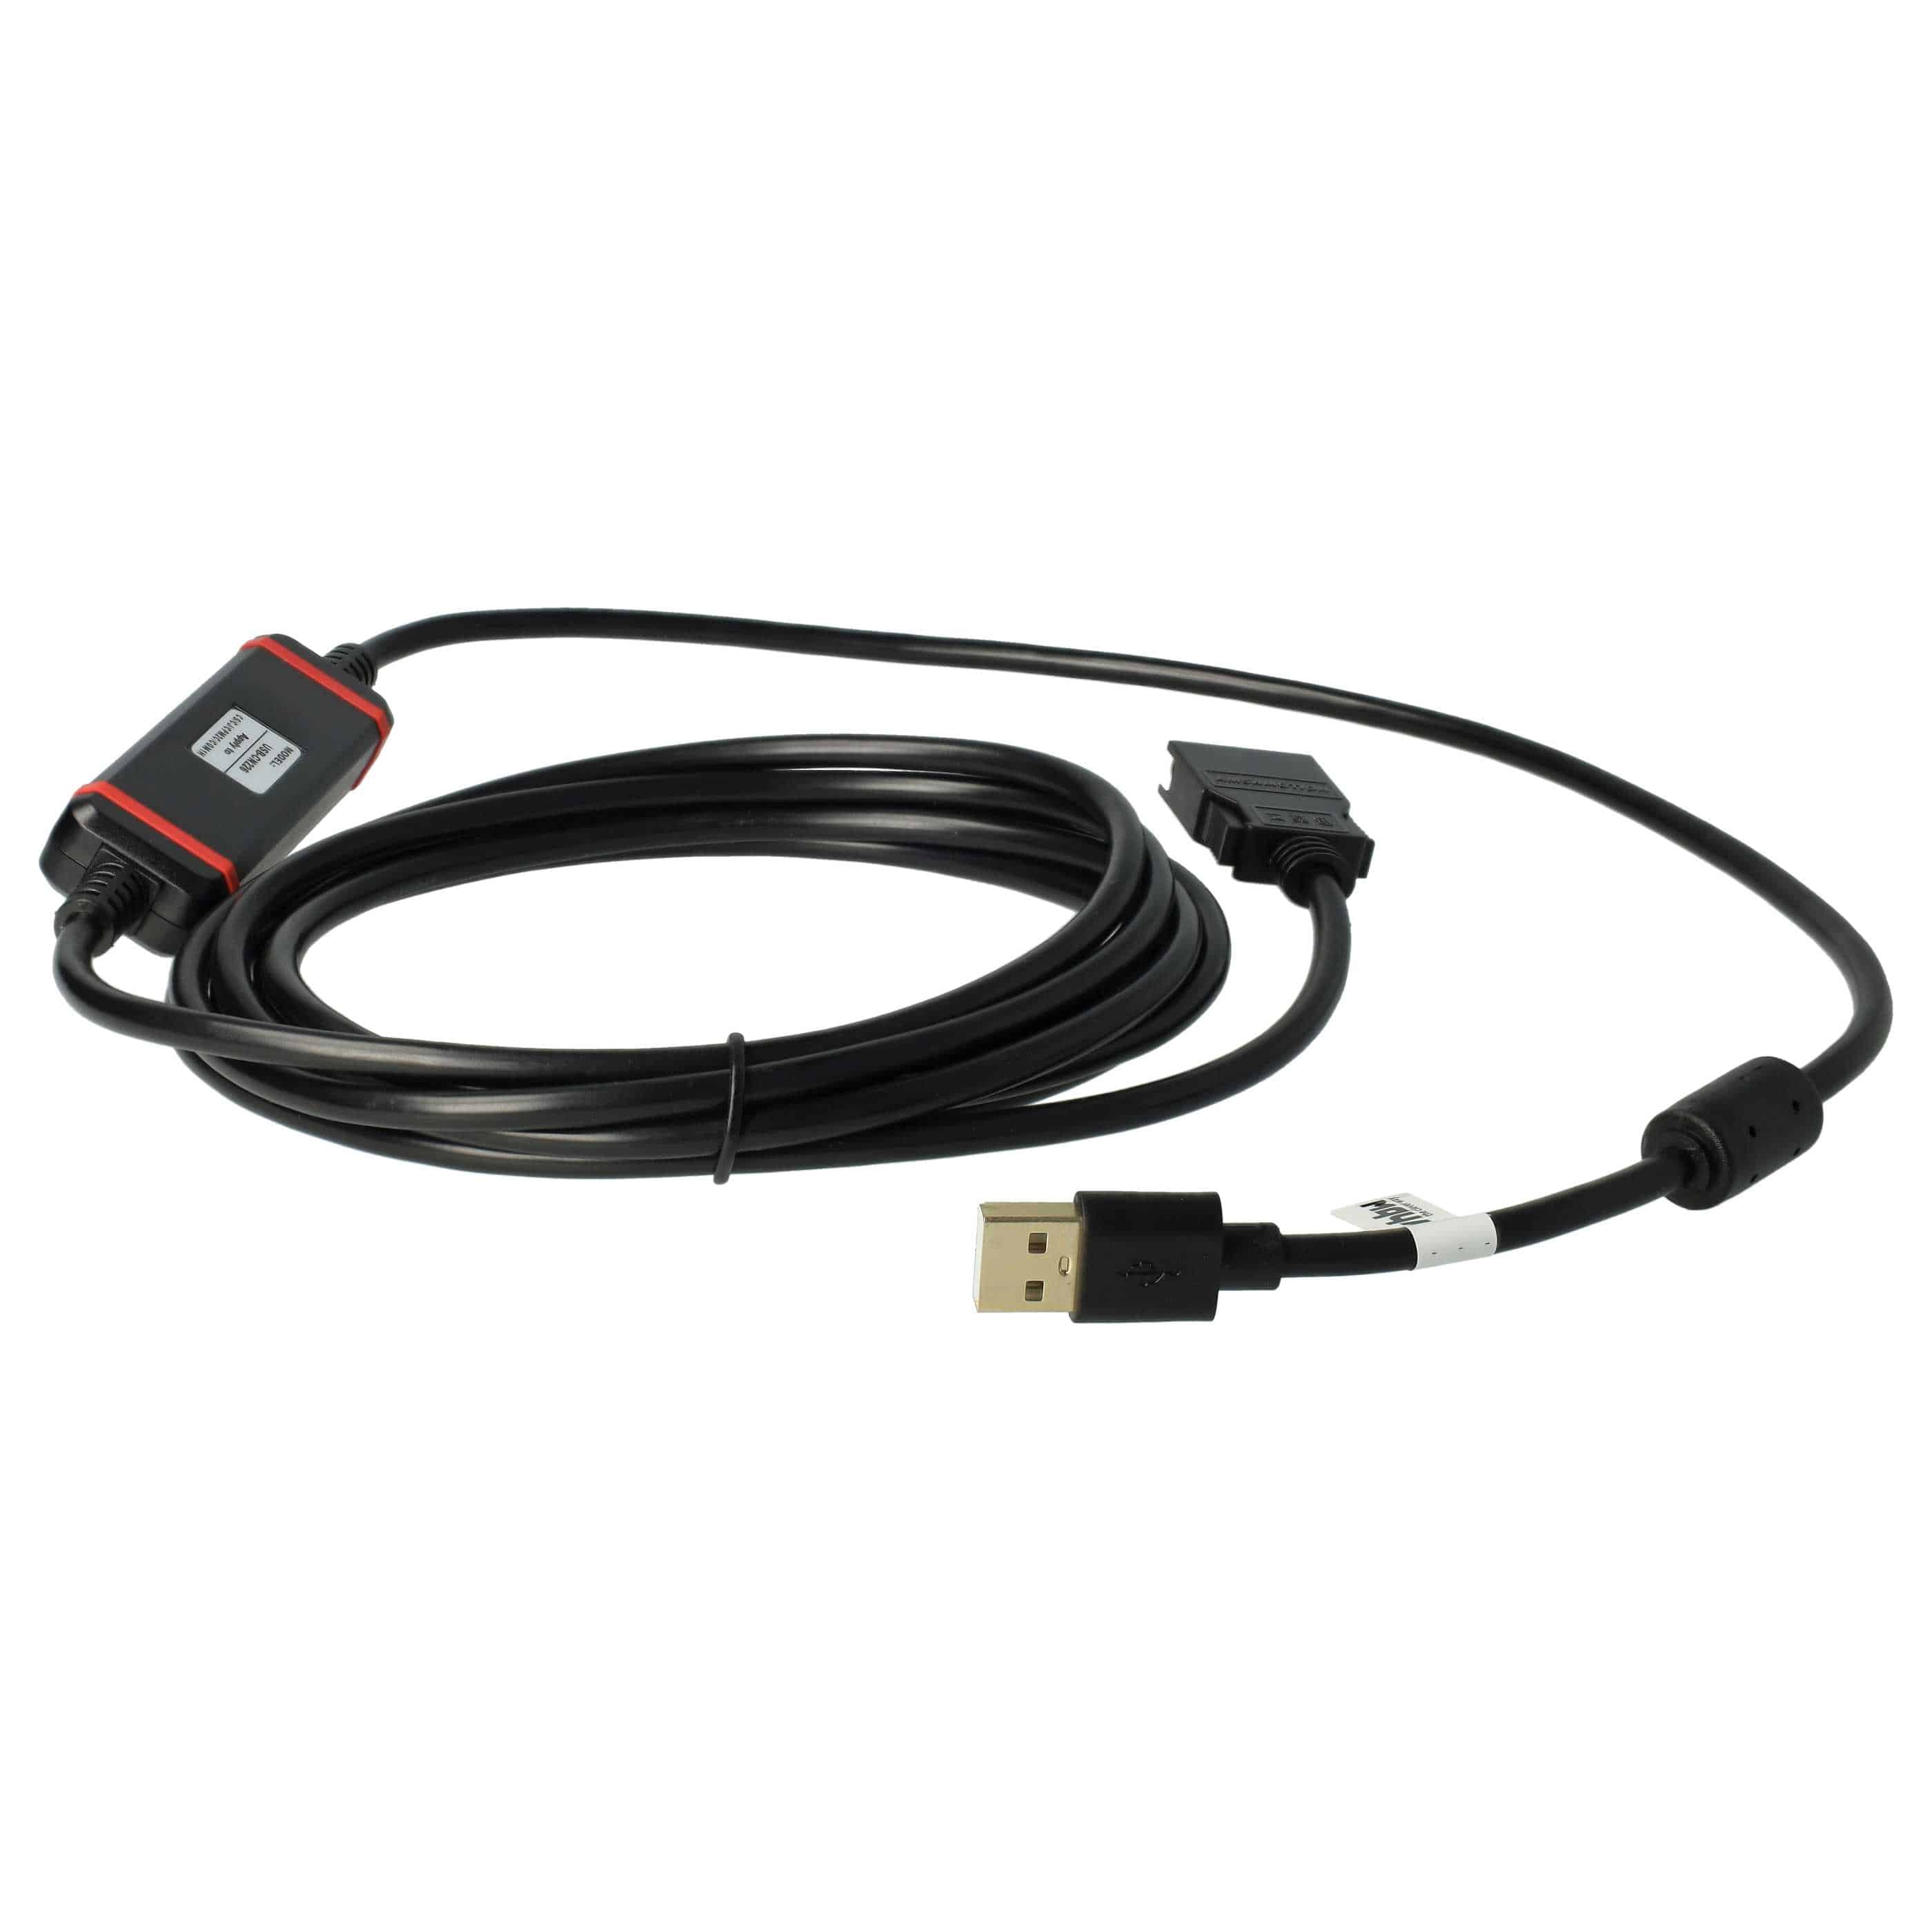 Câble de programmation remplace Omron USB-CN226, CS1W-CS114, CS1W-CN226 pour radio